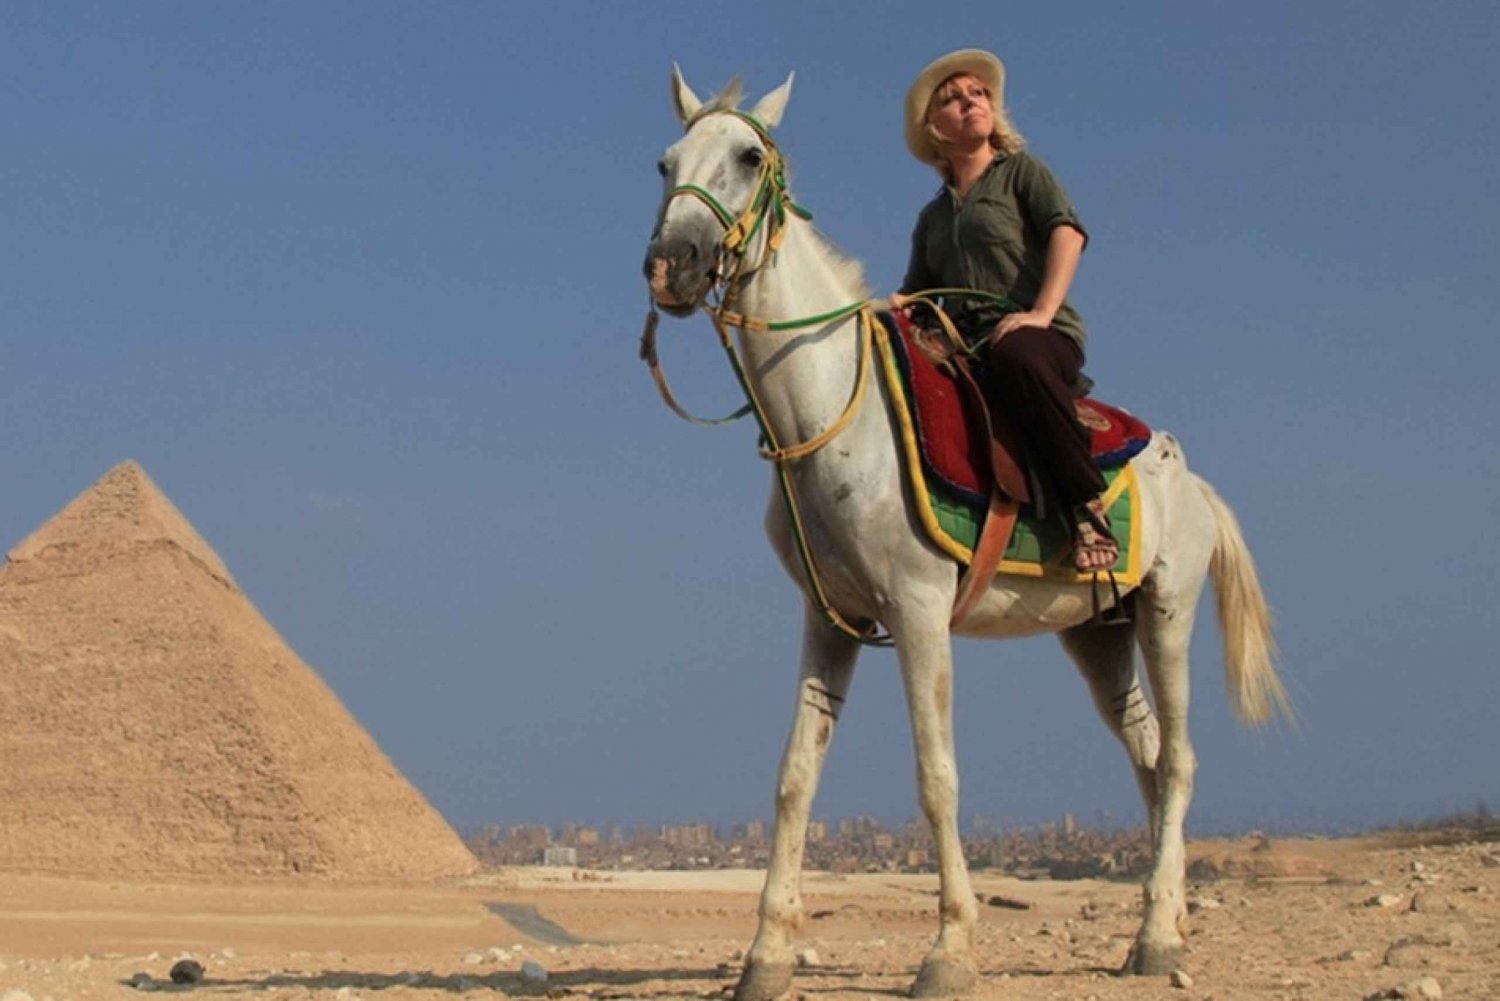 Giza: Arabian Horse Tour Around the Giza Pyramids